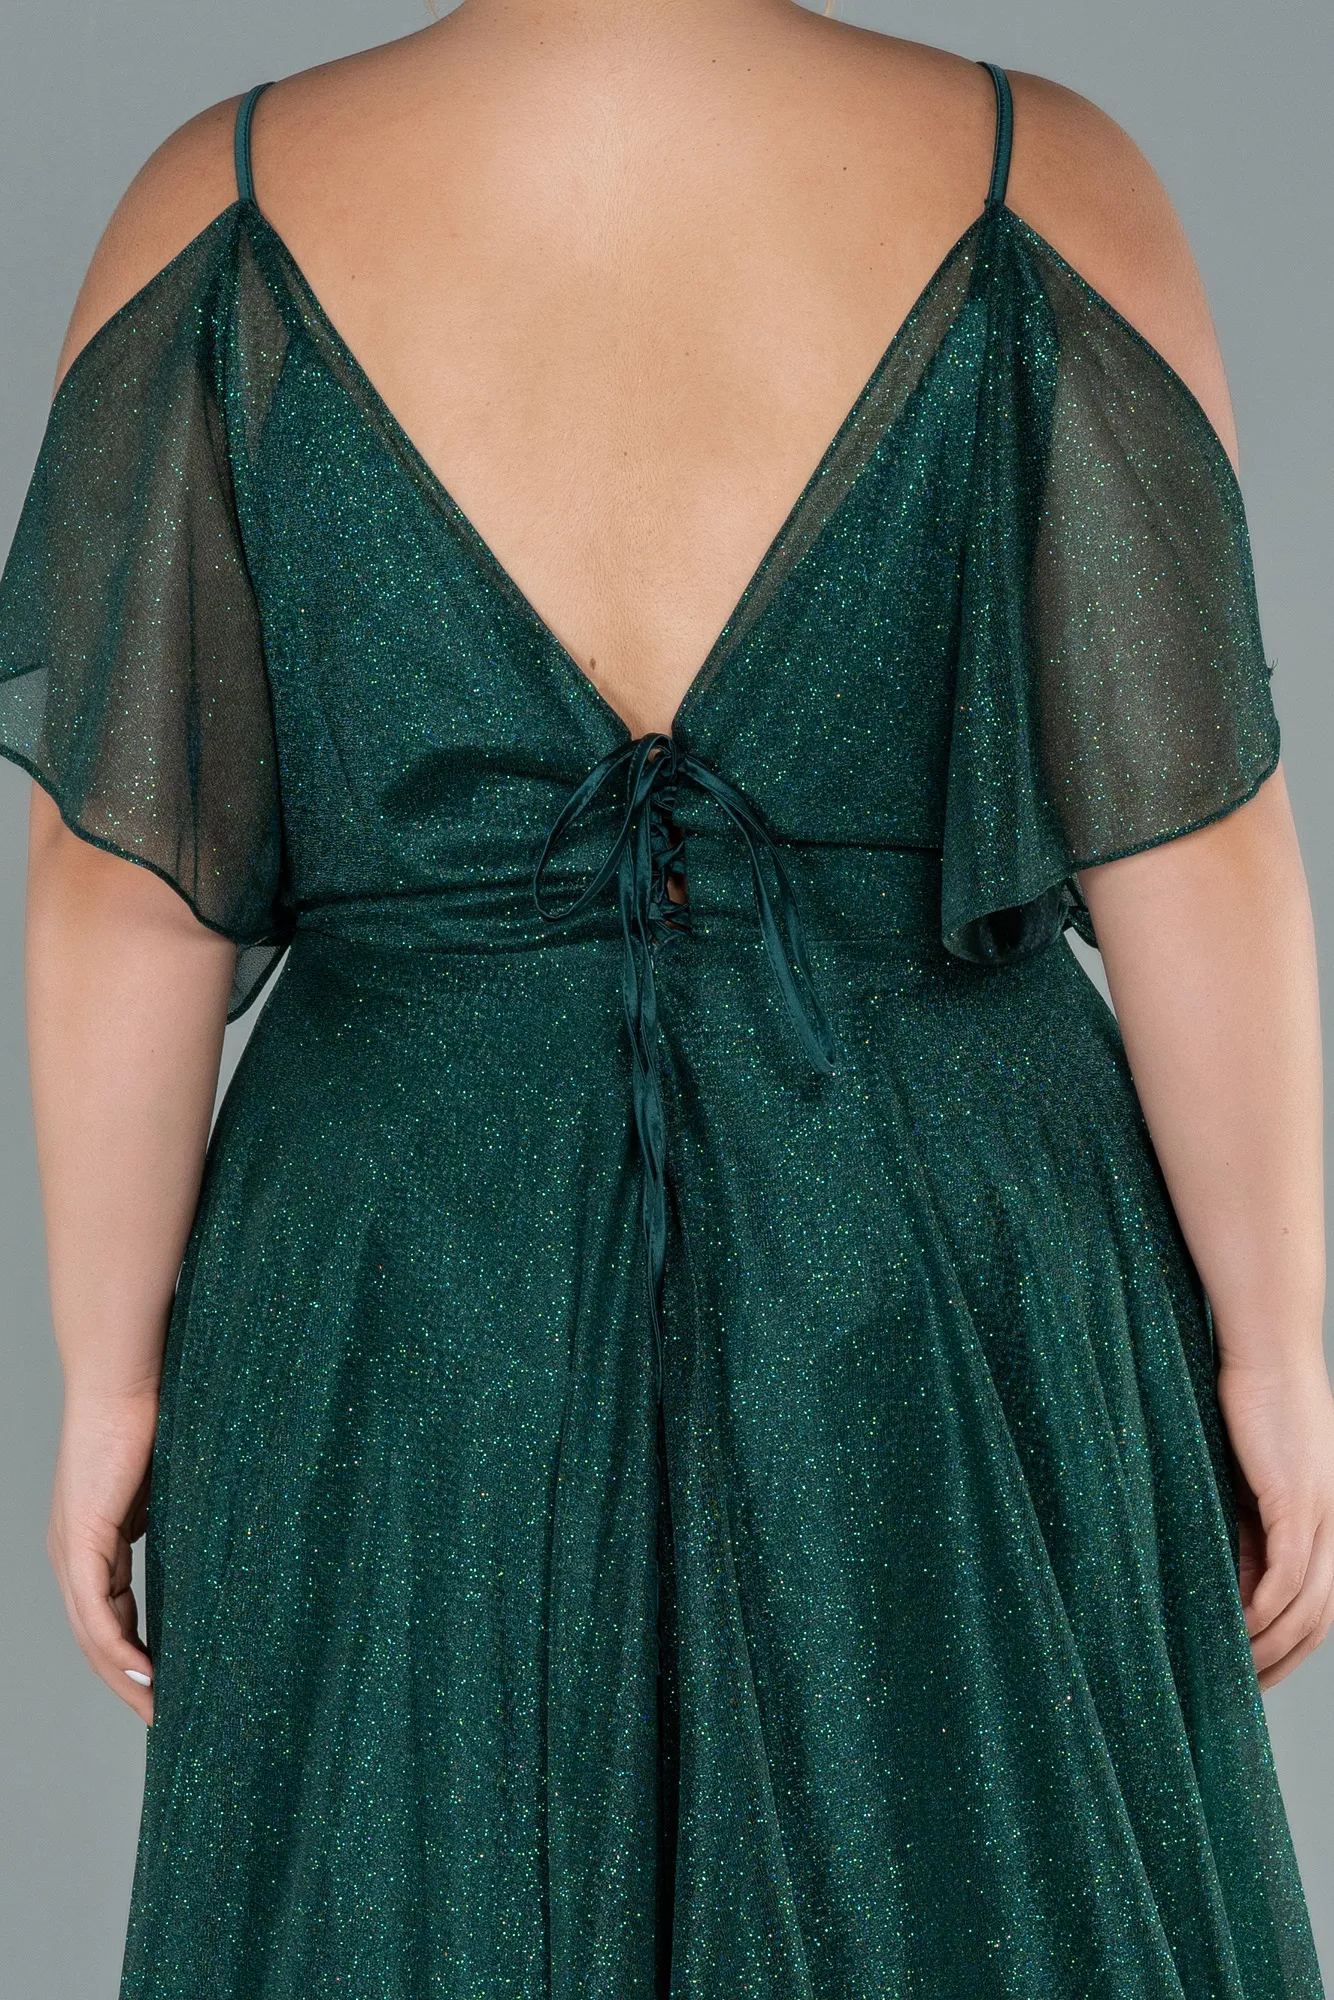 Emerald Green-Long Plus Size Evening Dress ABU2487